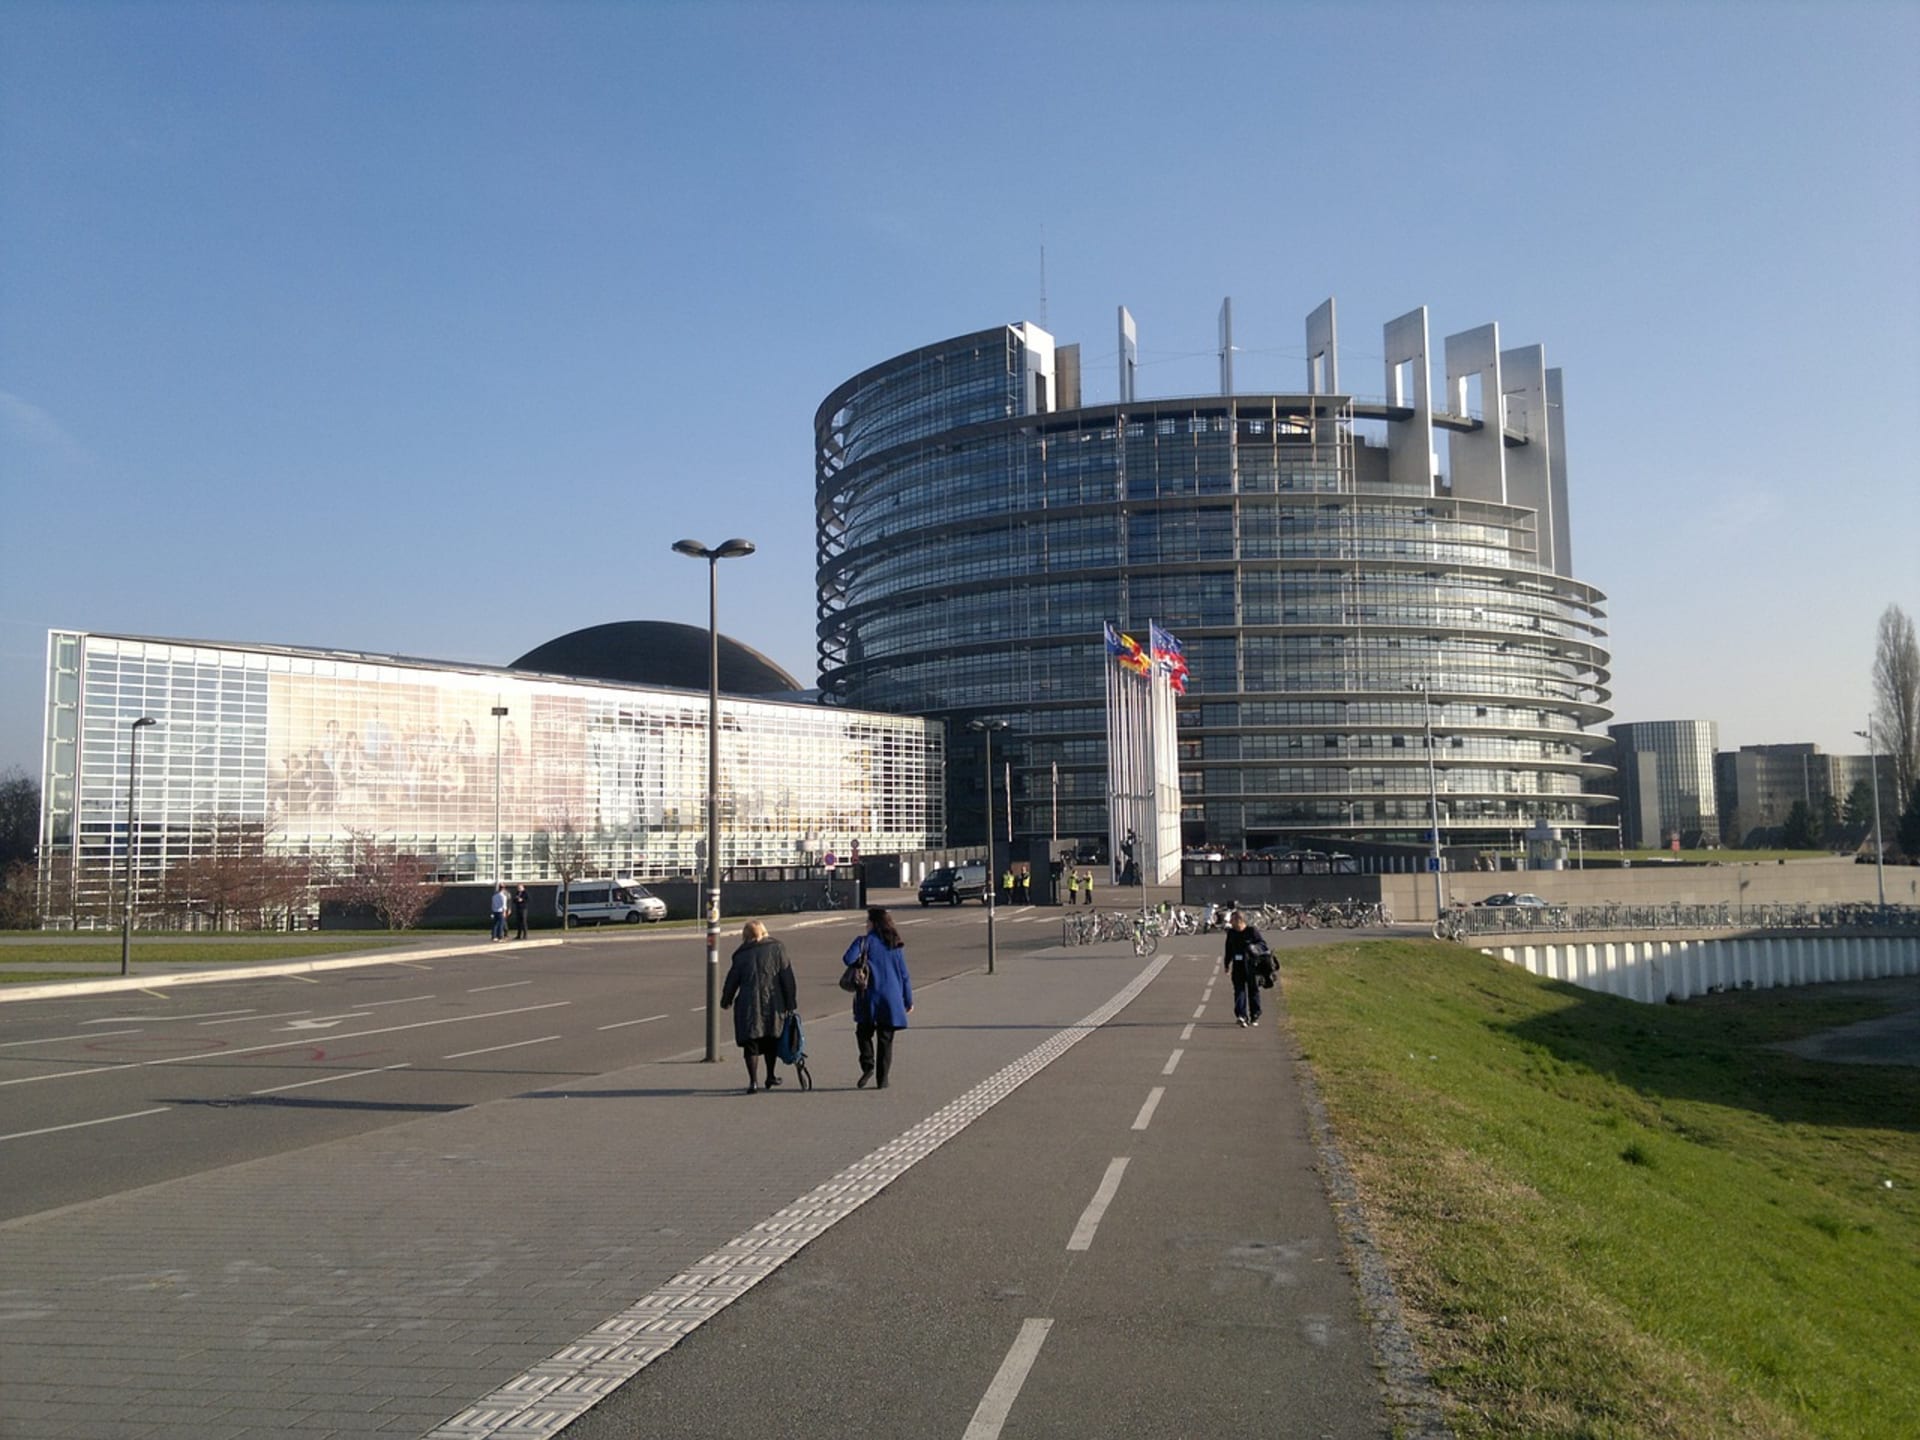 Evropský parlament